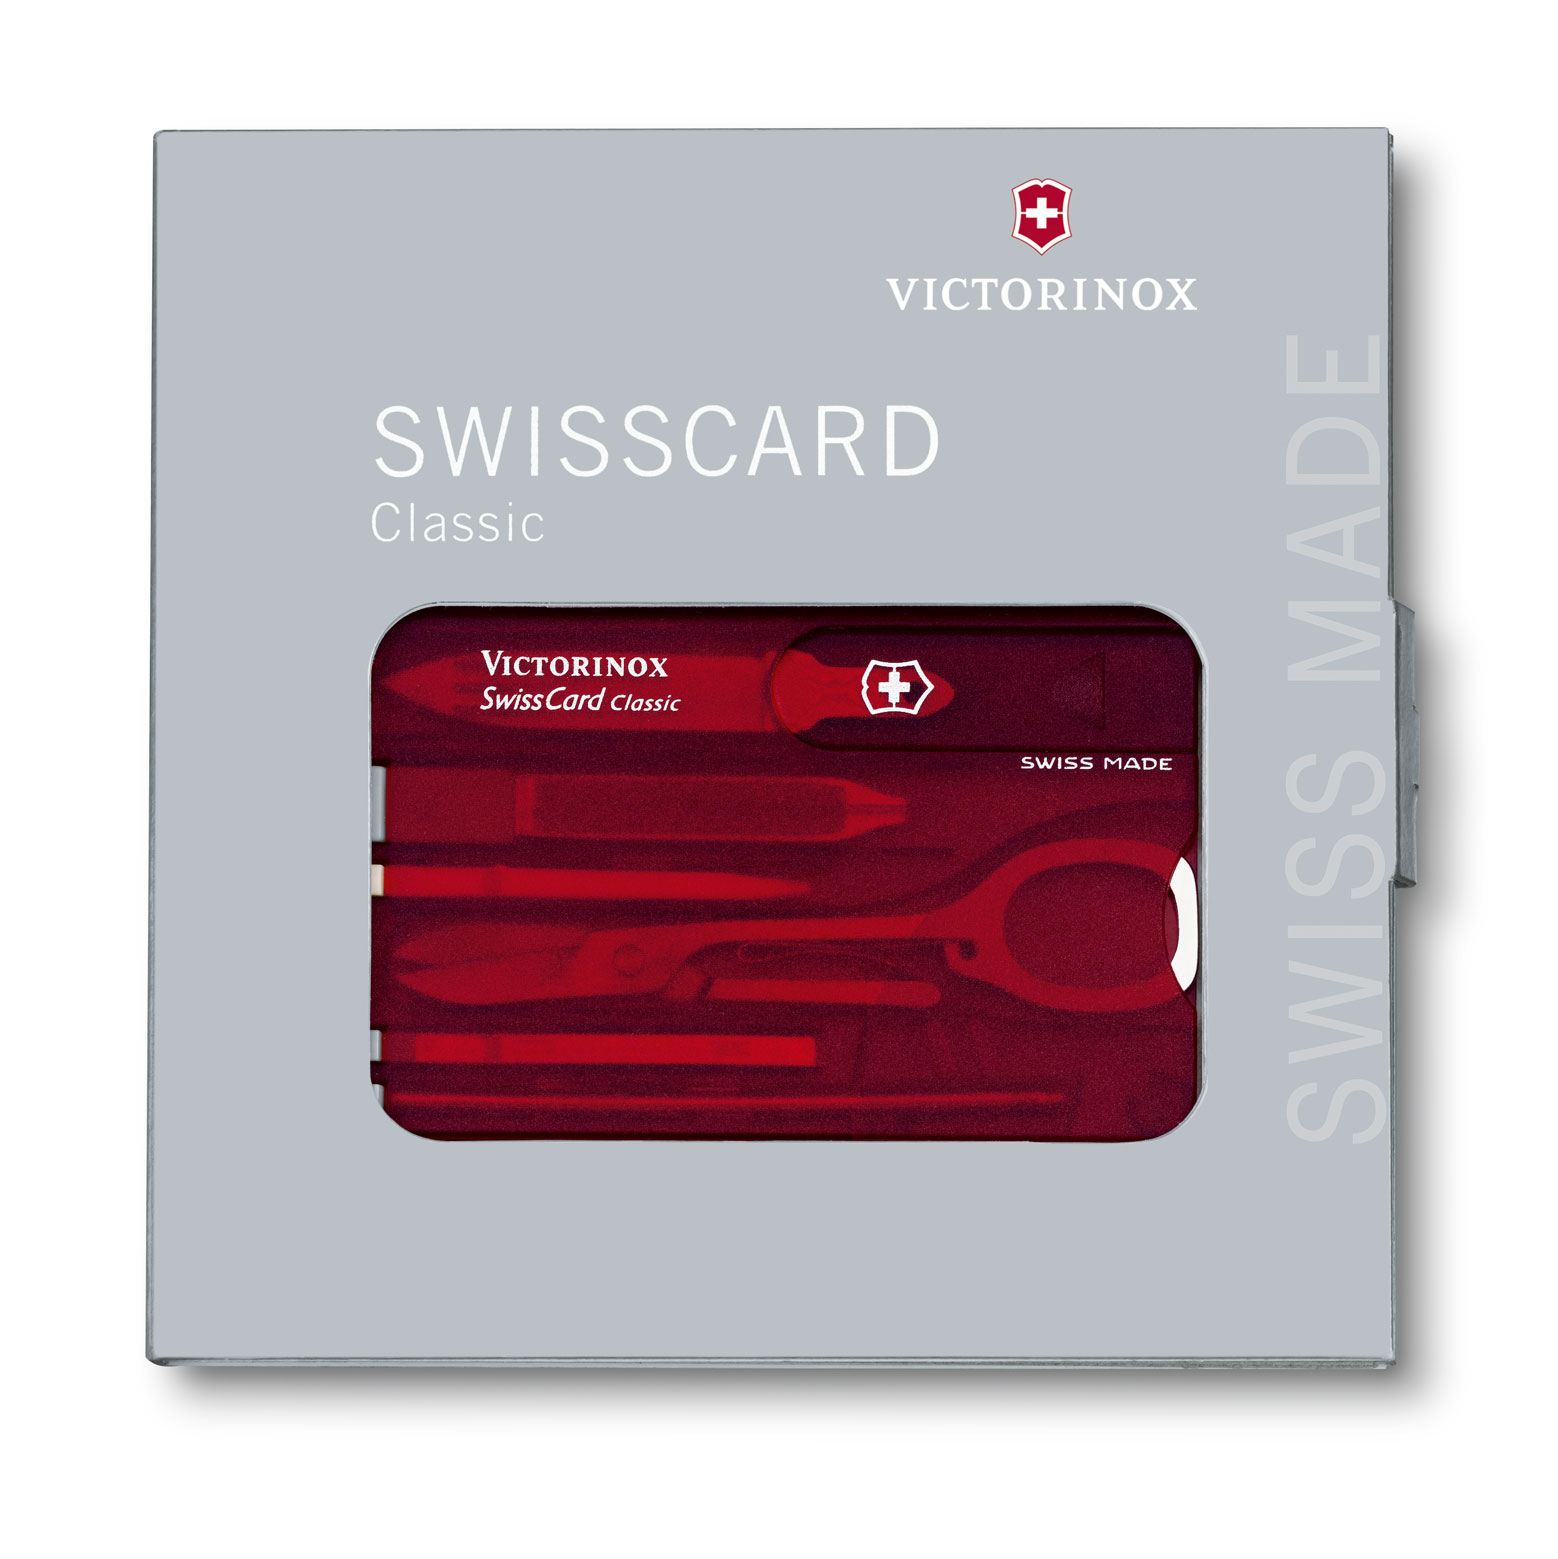 VICTORINOX SWISS CARD CLASSIC